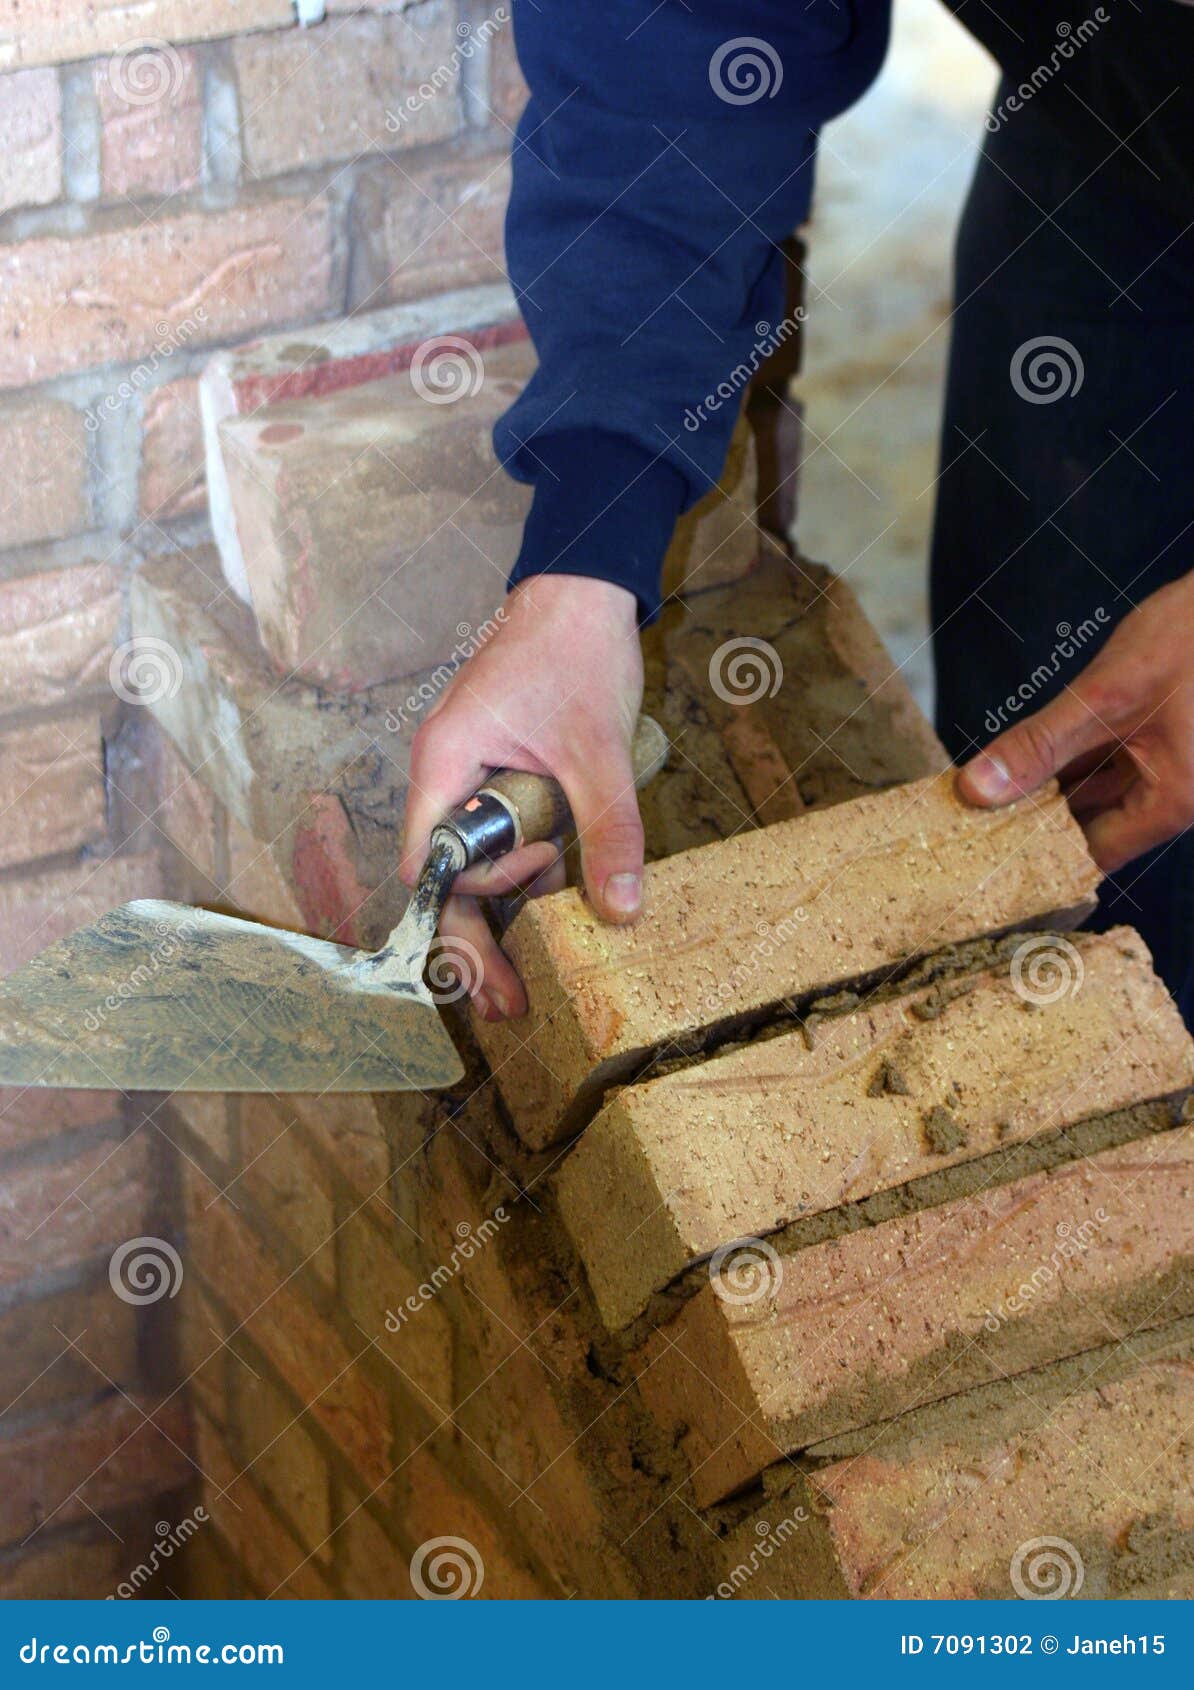 trainee bricklayer